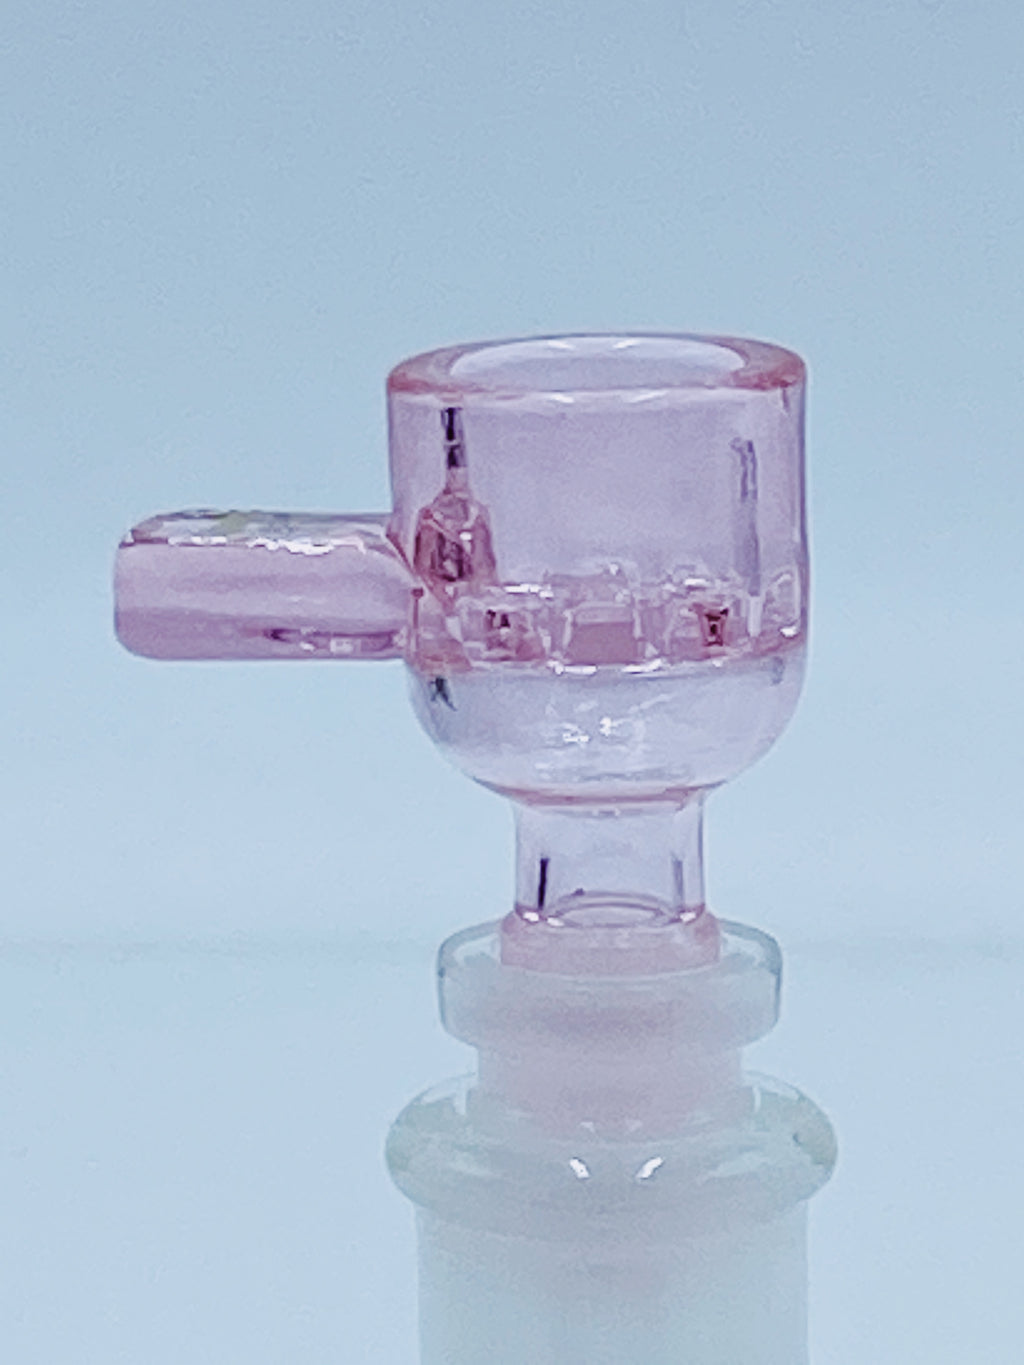 Preemo Glass 14mm Built In Screen Bowl